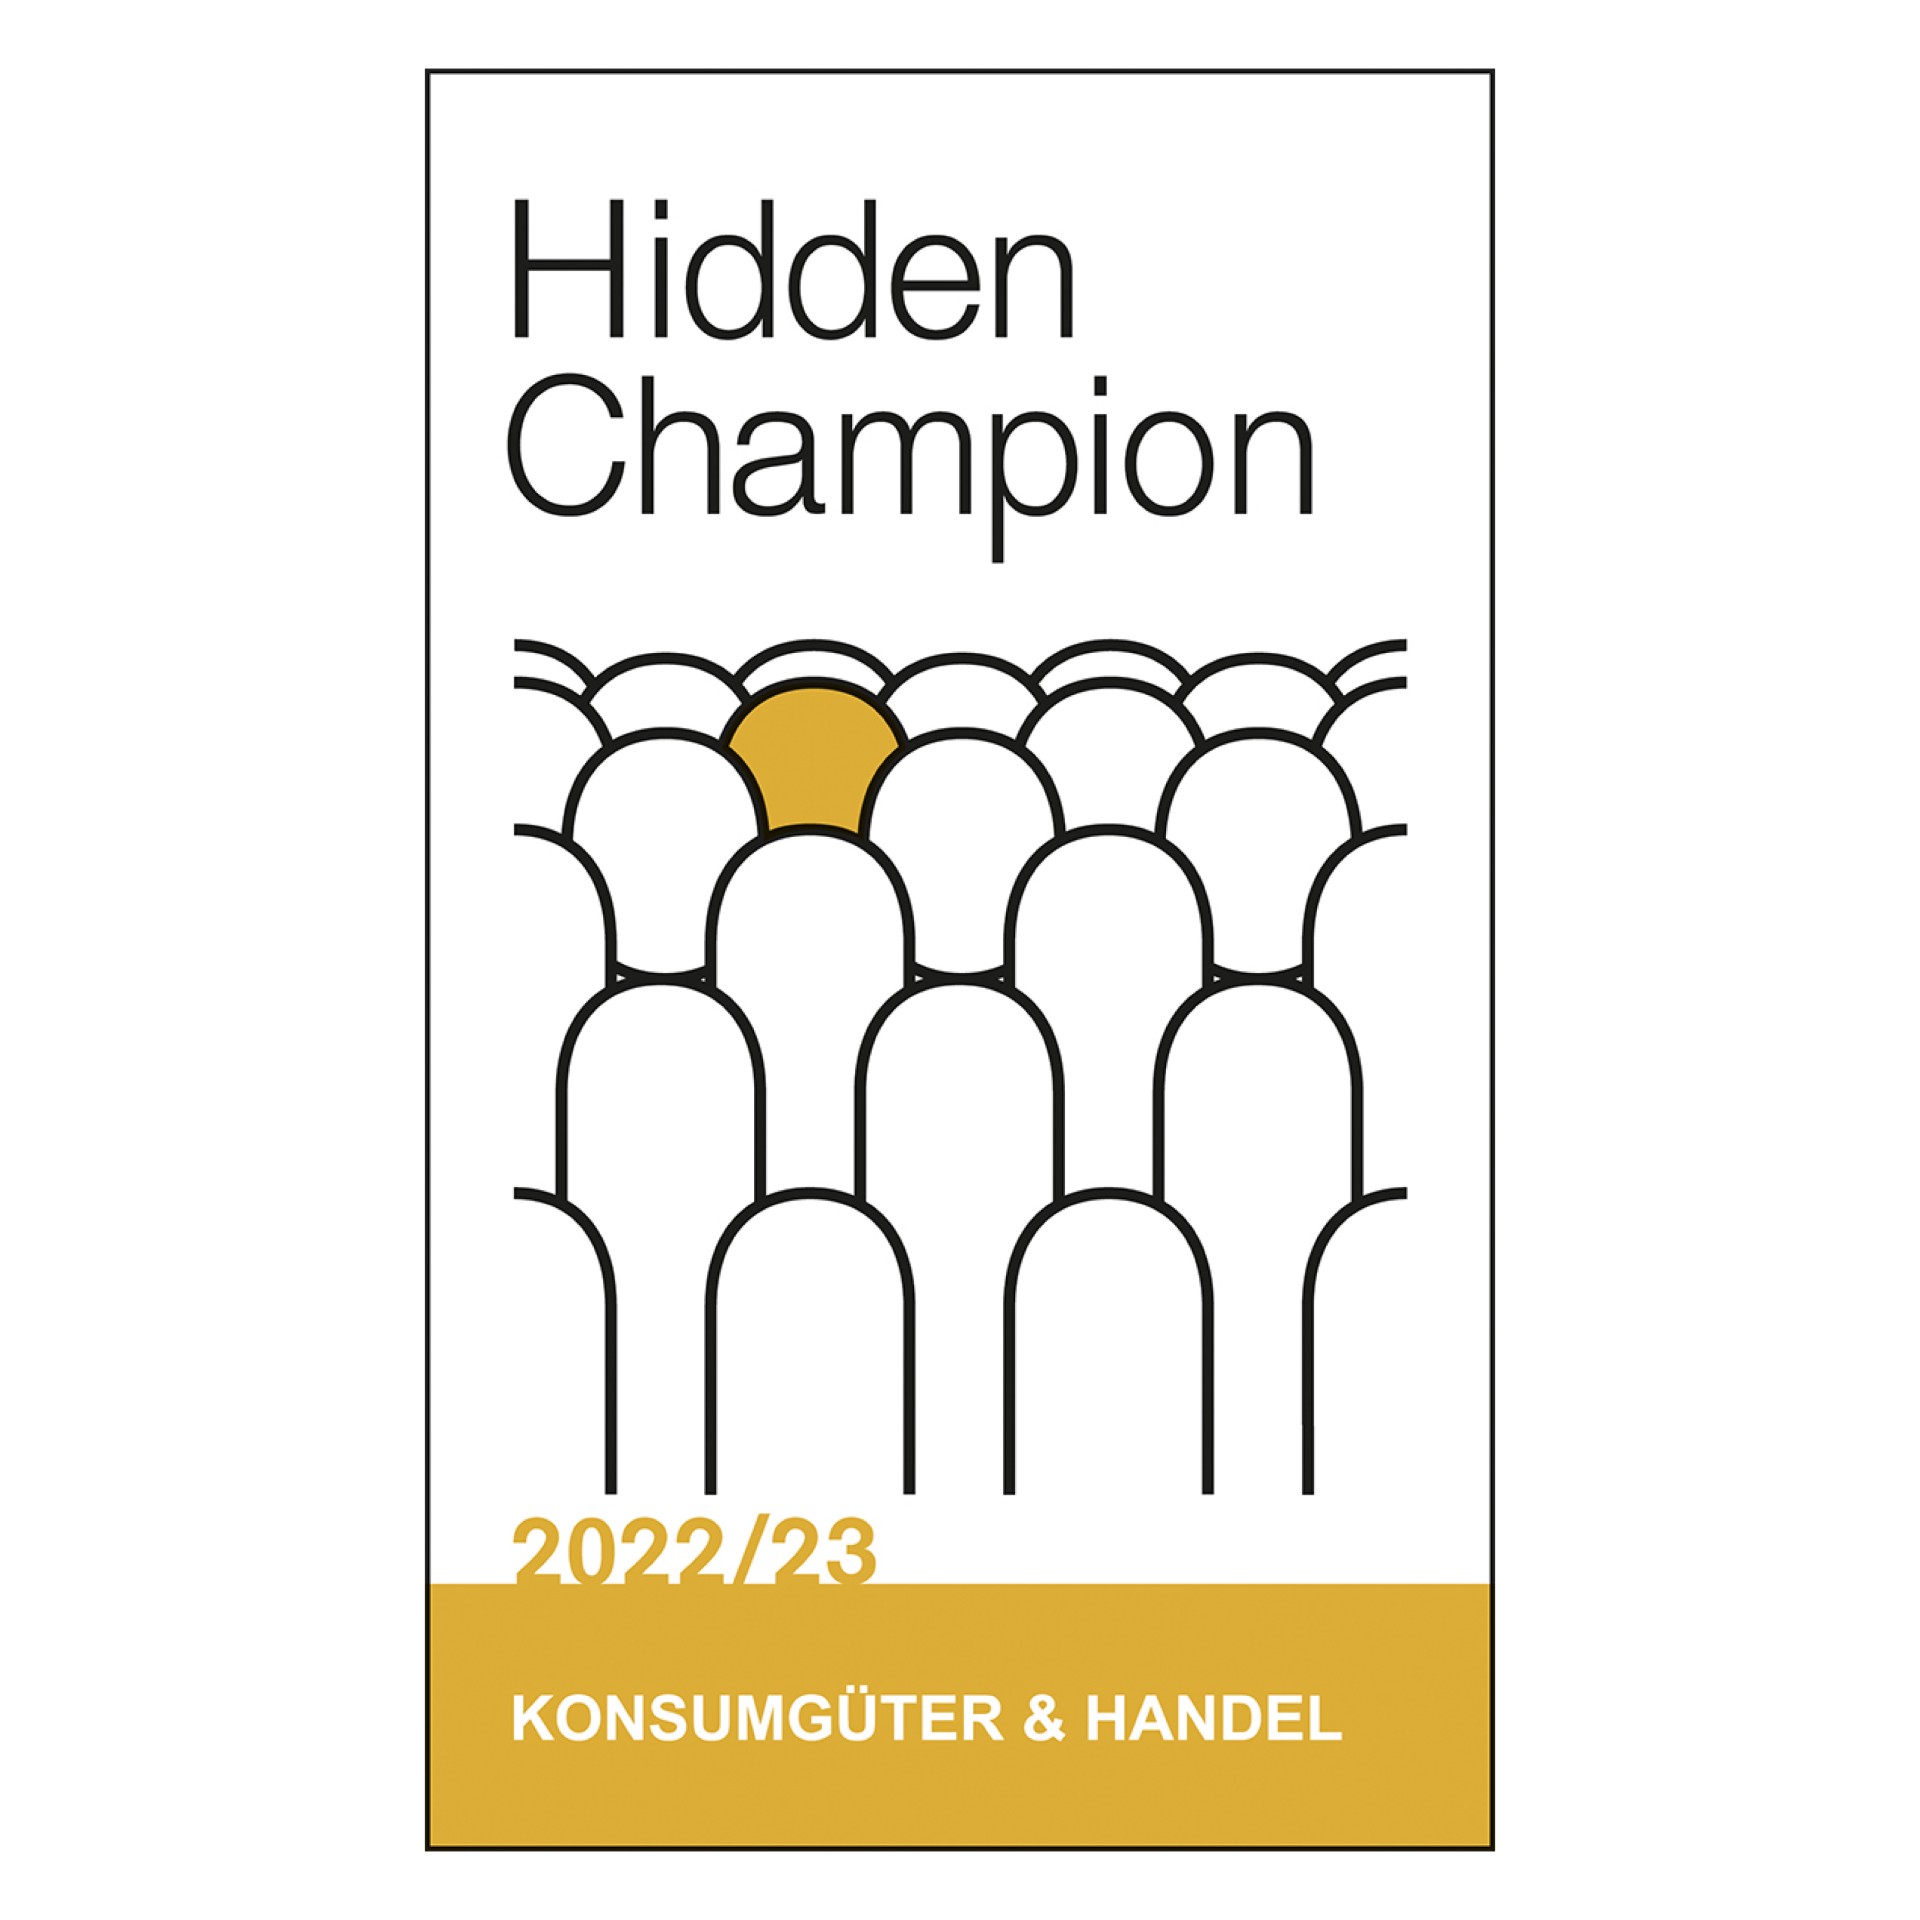 Hidden Champion Award